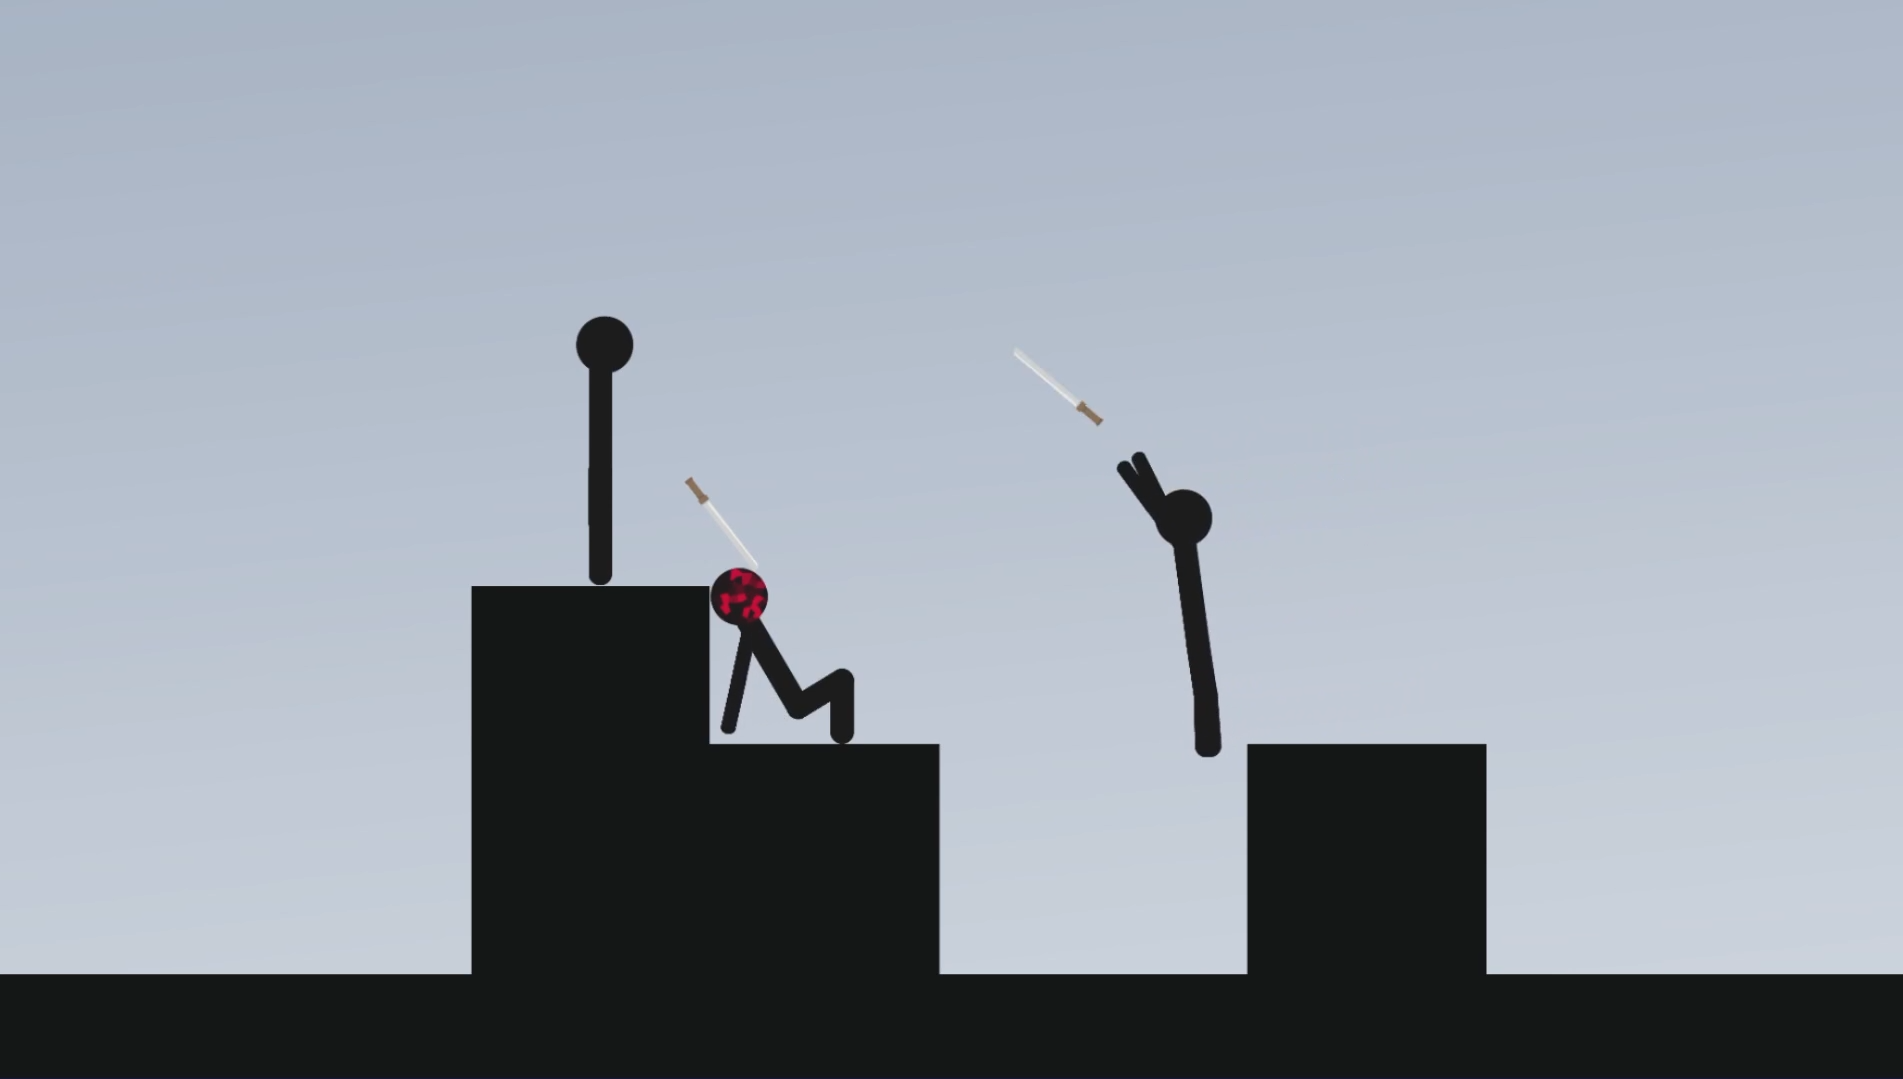 FREE GAME] Ragdoll Throw Challenge 2 - Stickman Sword Battle Thread - Mod DB